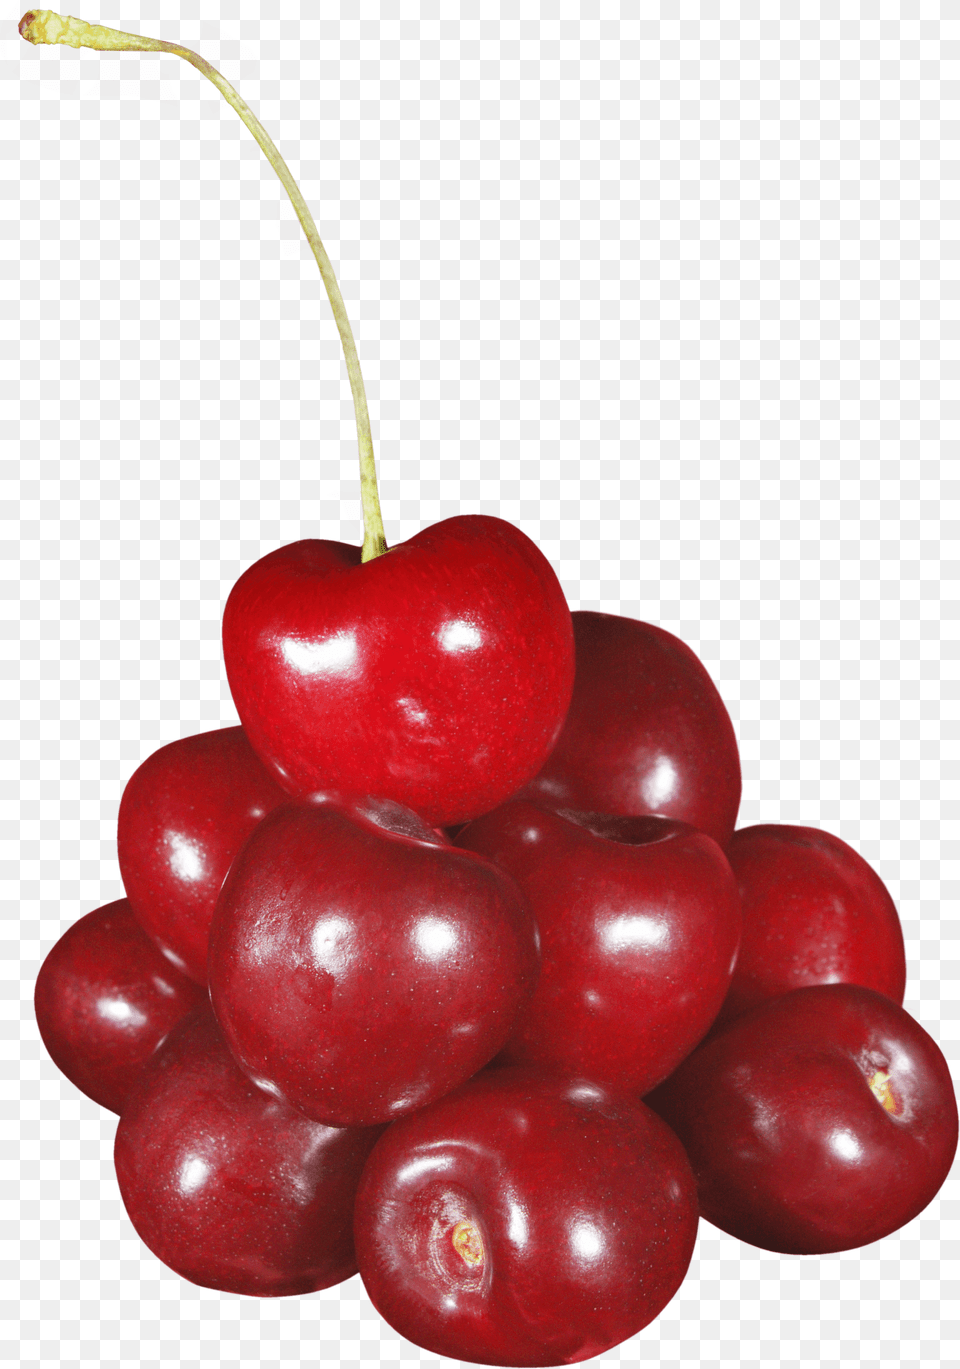 Cherries Pile Cherry Transparent, Food, Fruit, Plant, Produce Png Image